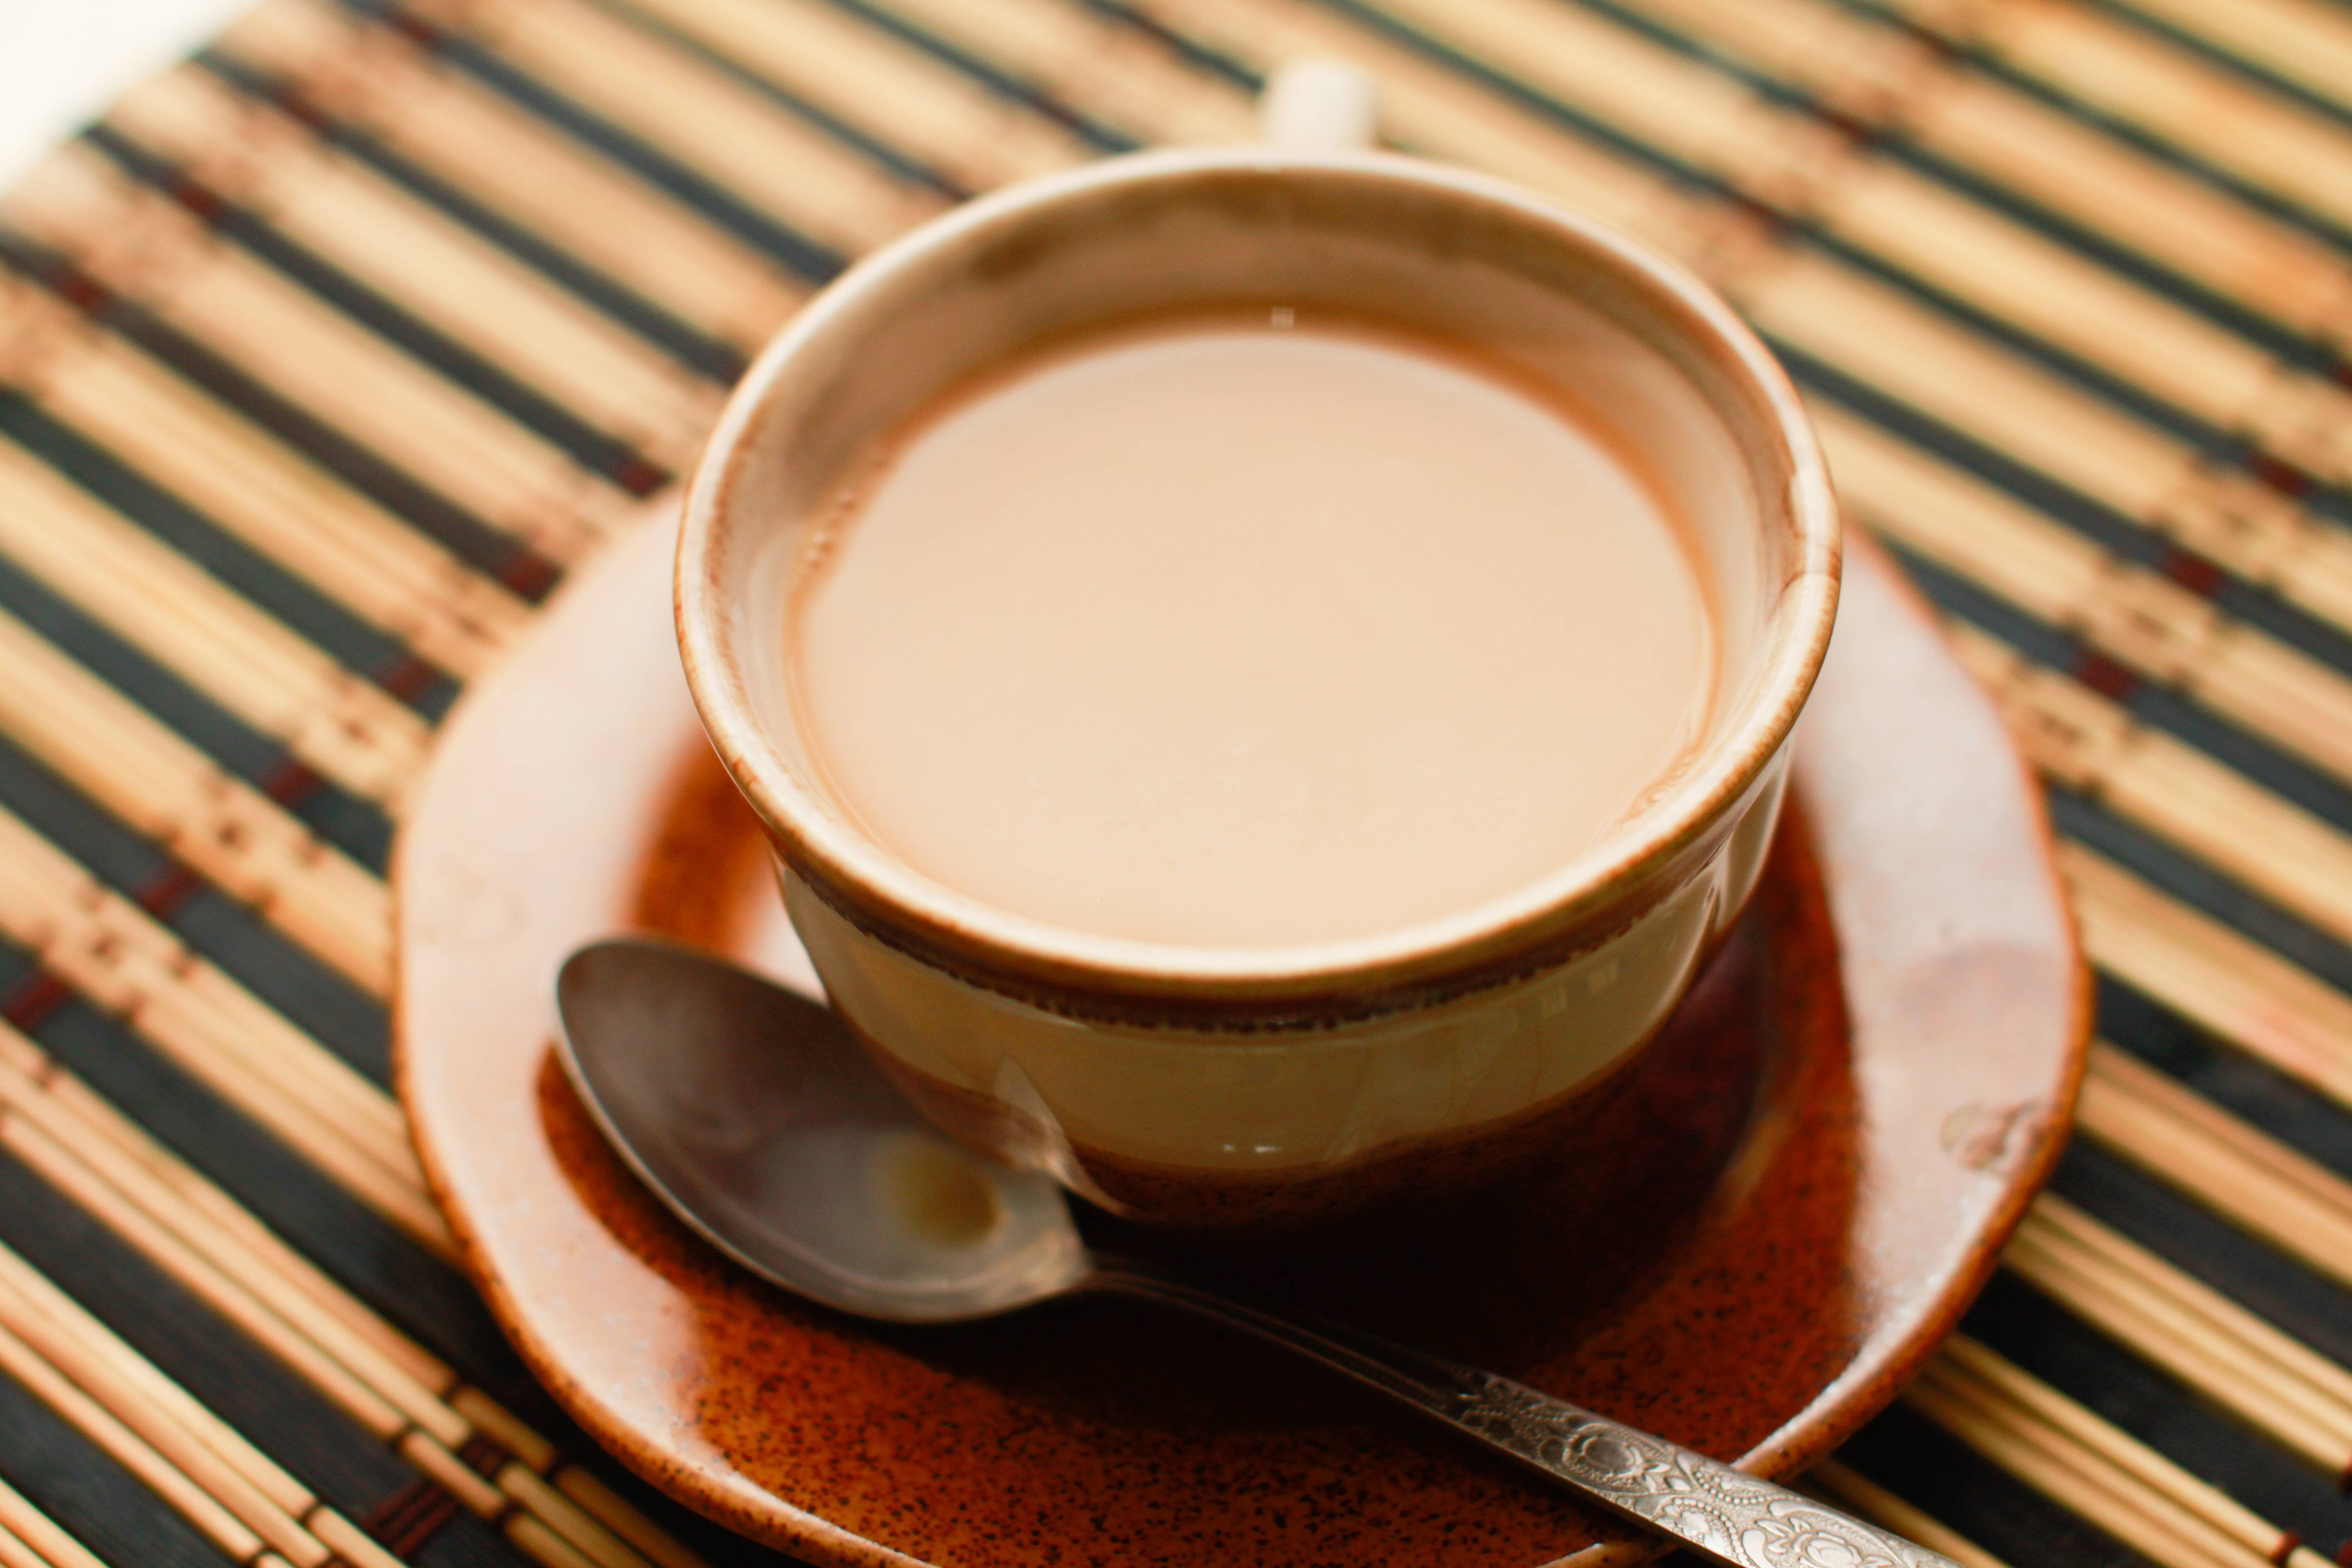 Coffee is with milk. Чай с молоком. Чашка чая с молоком. Кофе с молоком. Чай с молоком и медом.